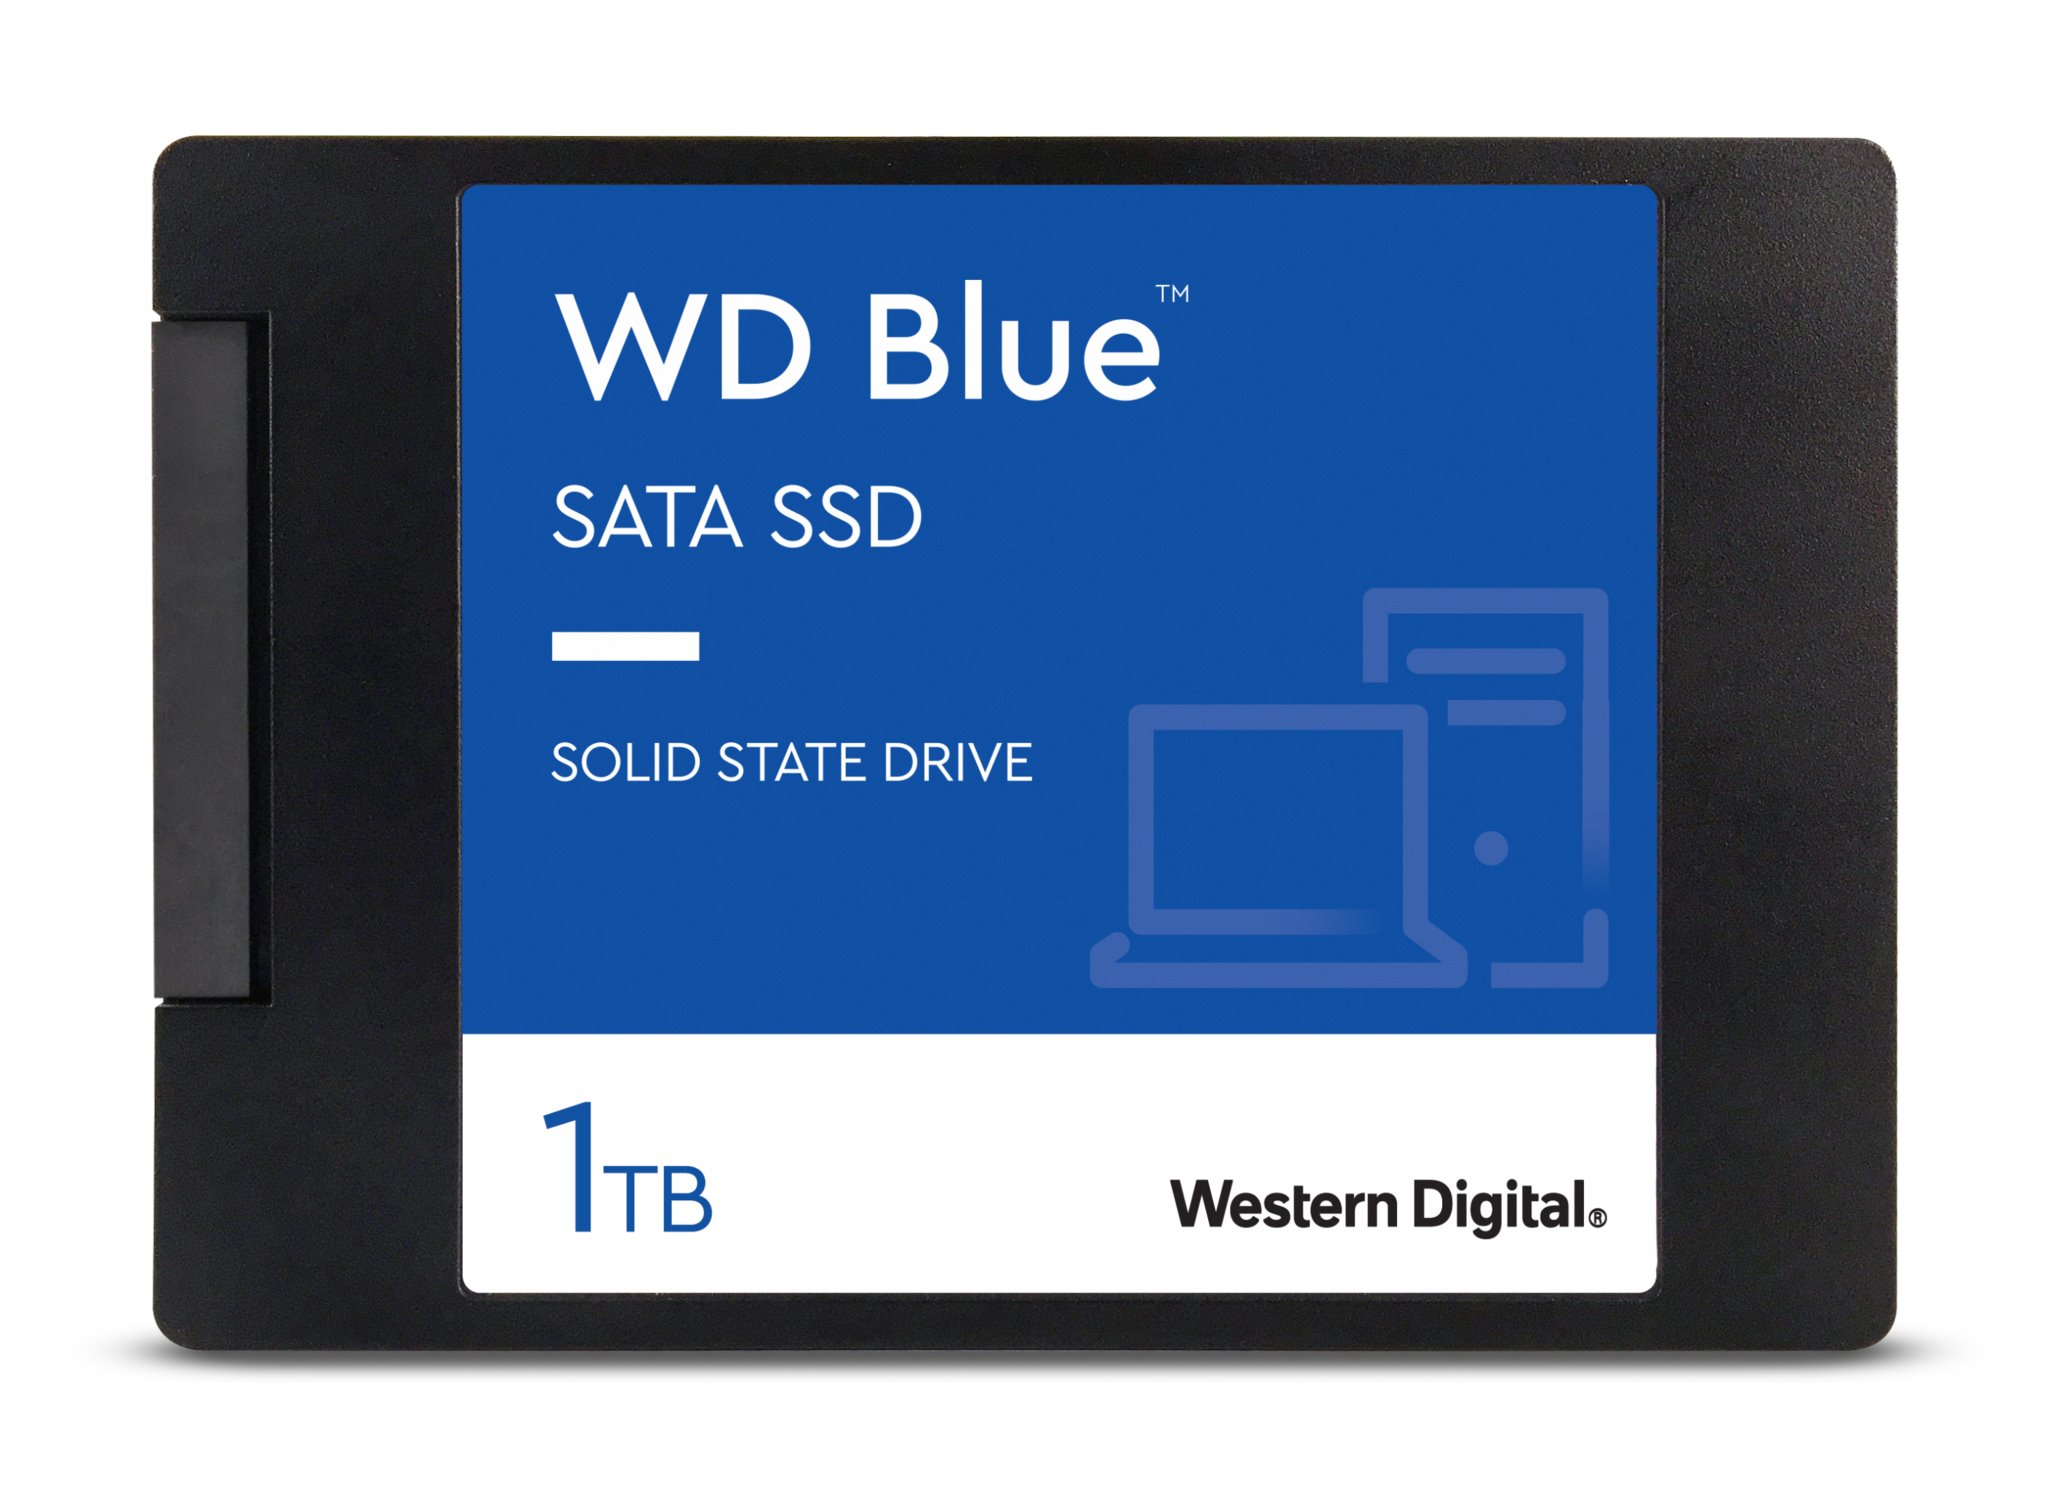 WD Blue SSD SA510 1TB